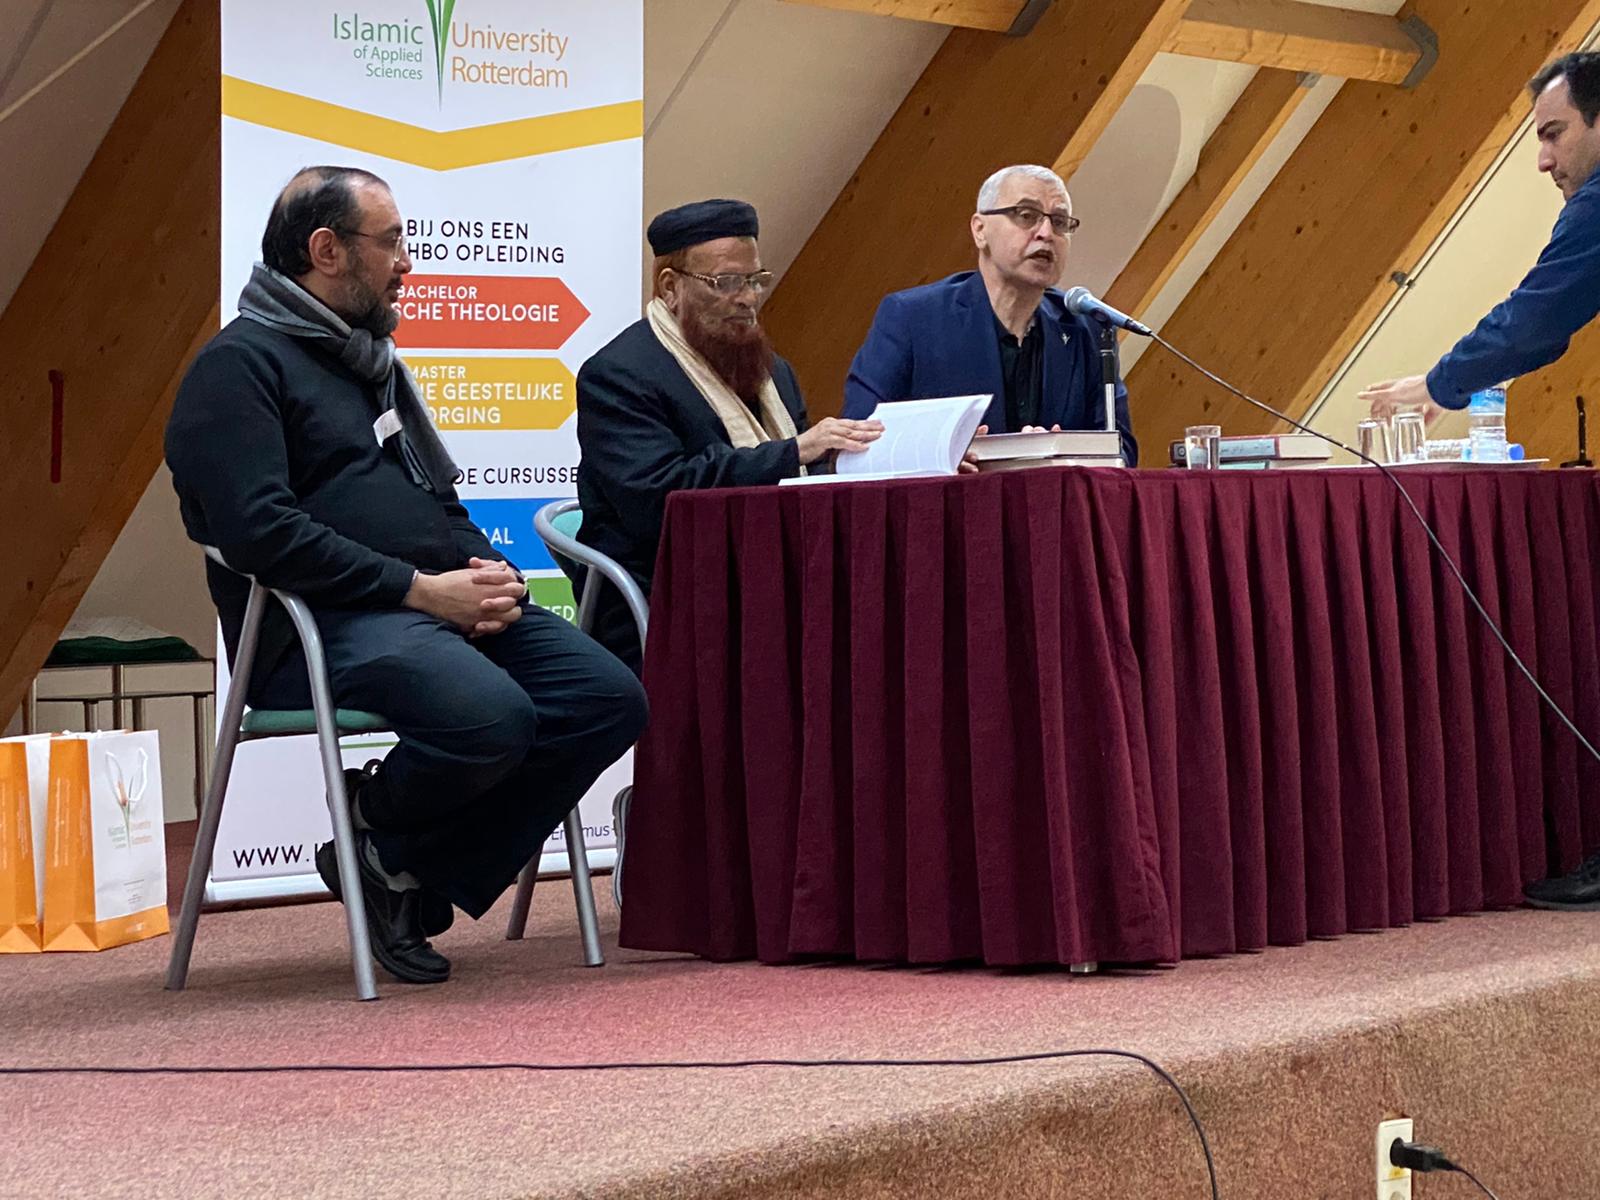 Lecture at Islamic University (Rotterdam)